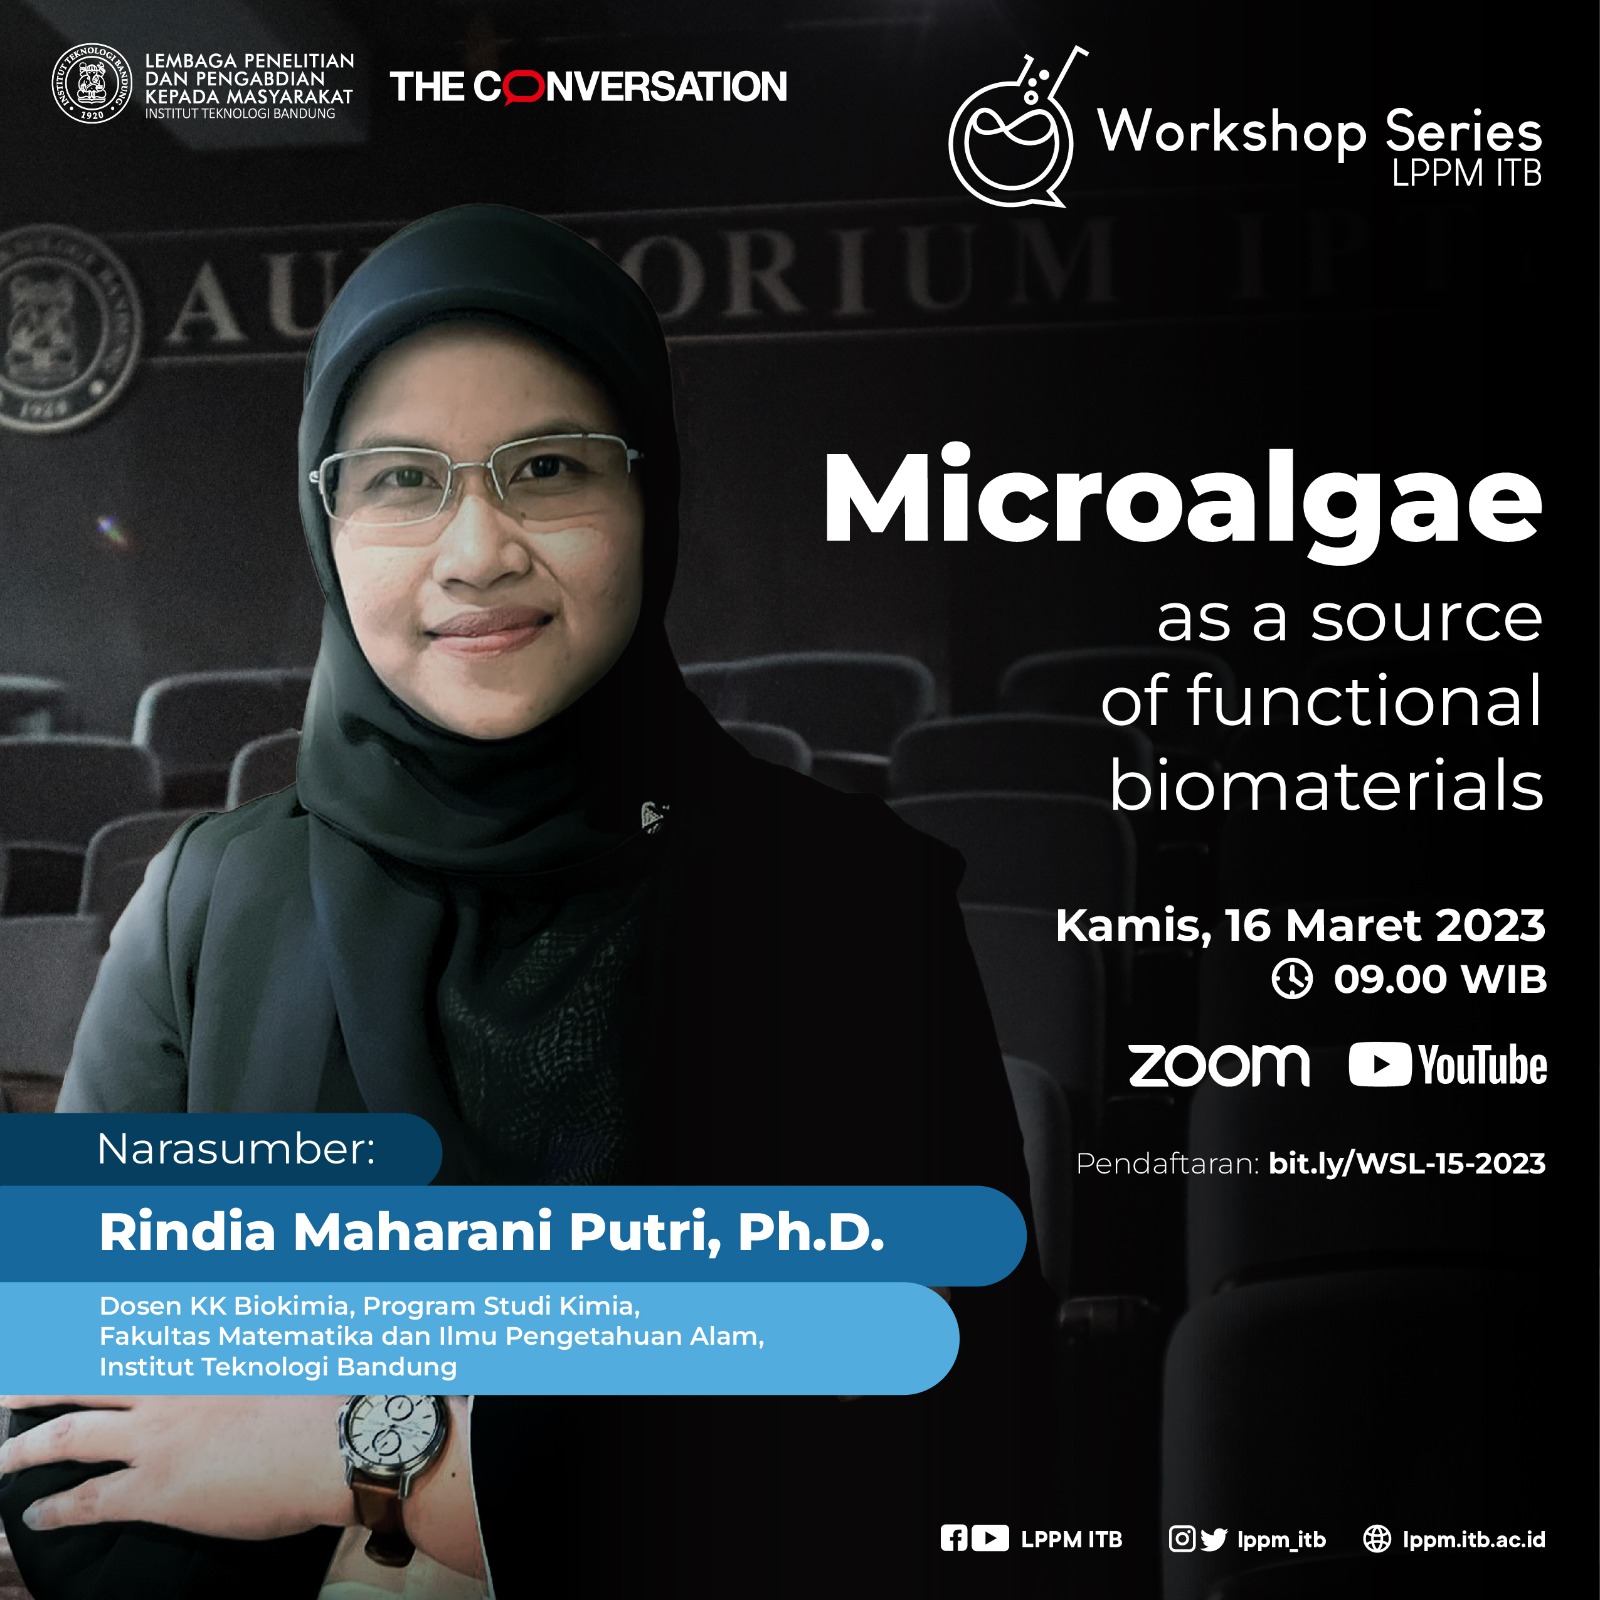 Workshop Series LPPM ITB Microalgae as a source of functional biomaterials